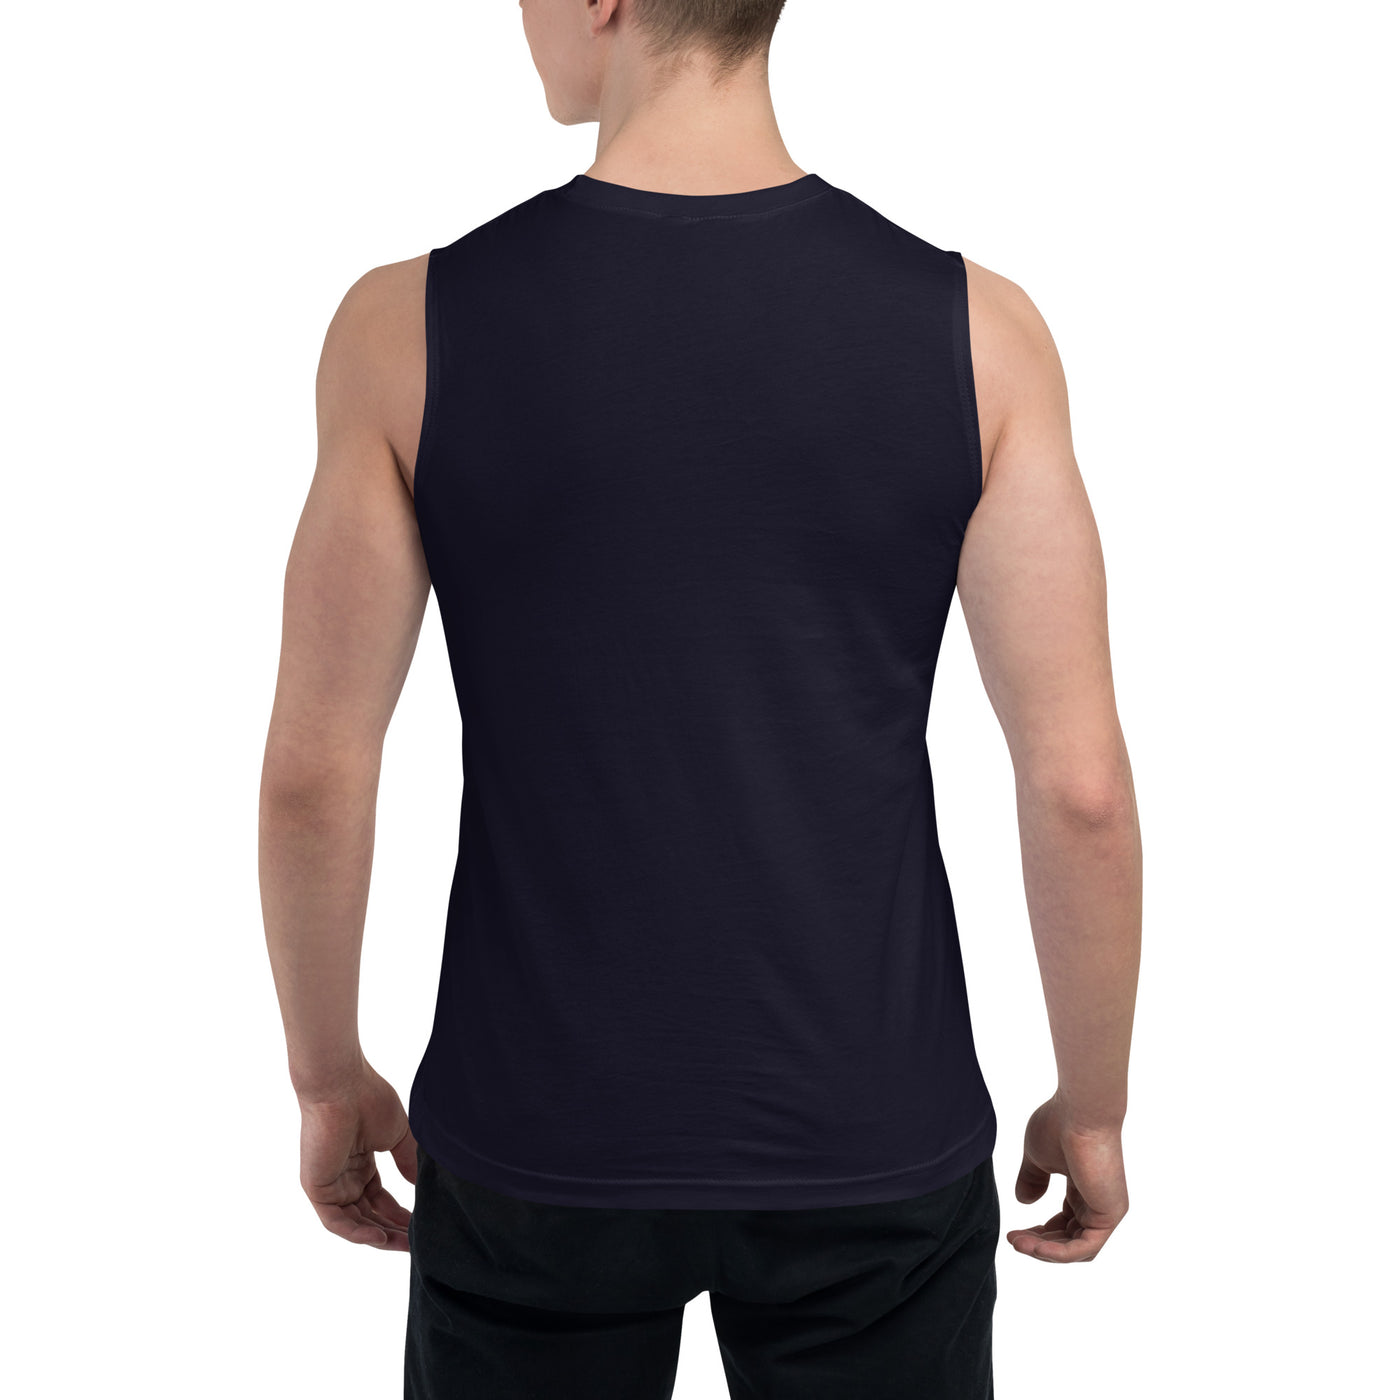 PITFIT Black Muscle Shirt